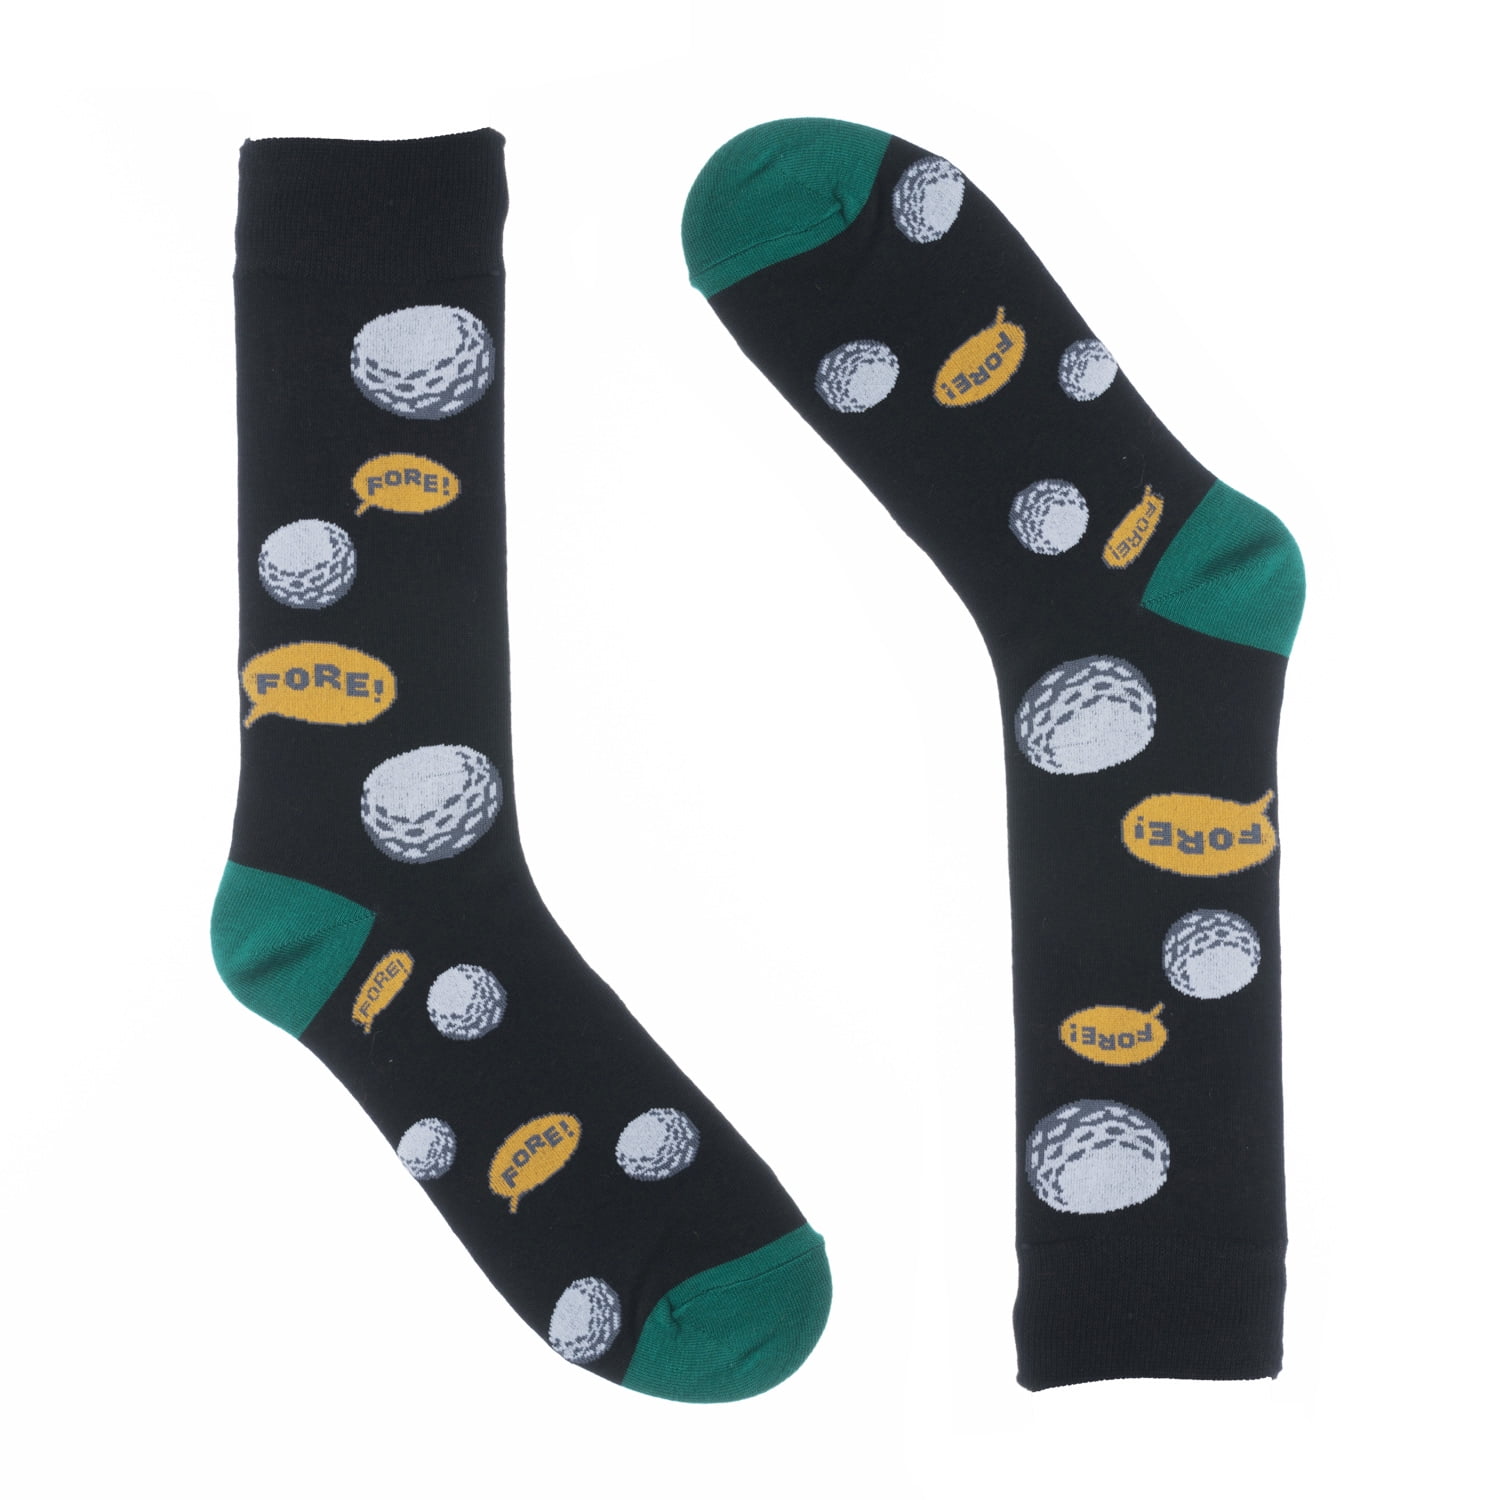 Ivory + Mason - novelty socks for men - fun colorful dress socks ...